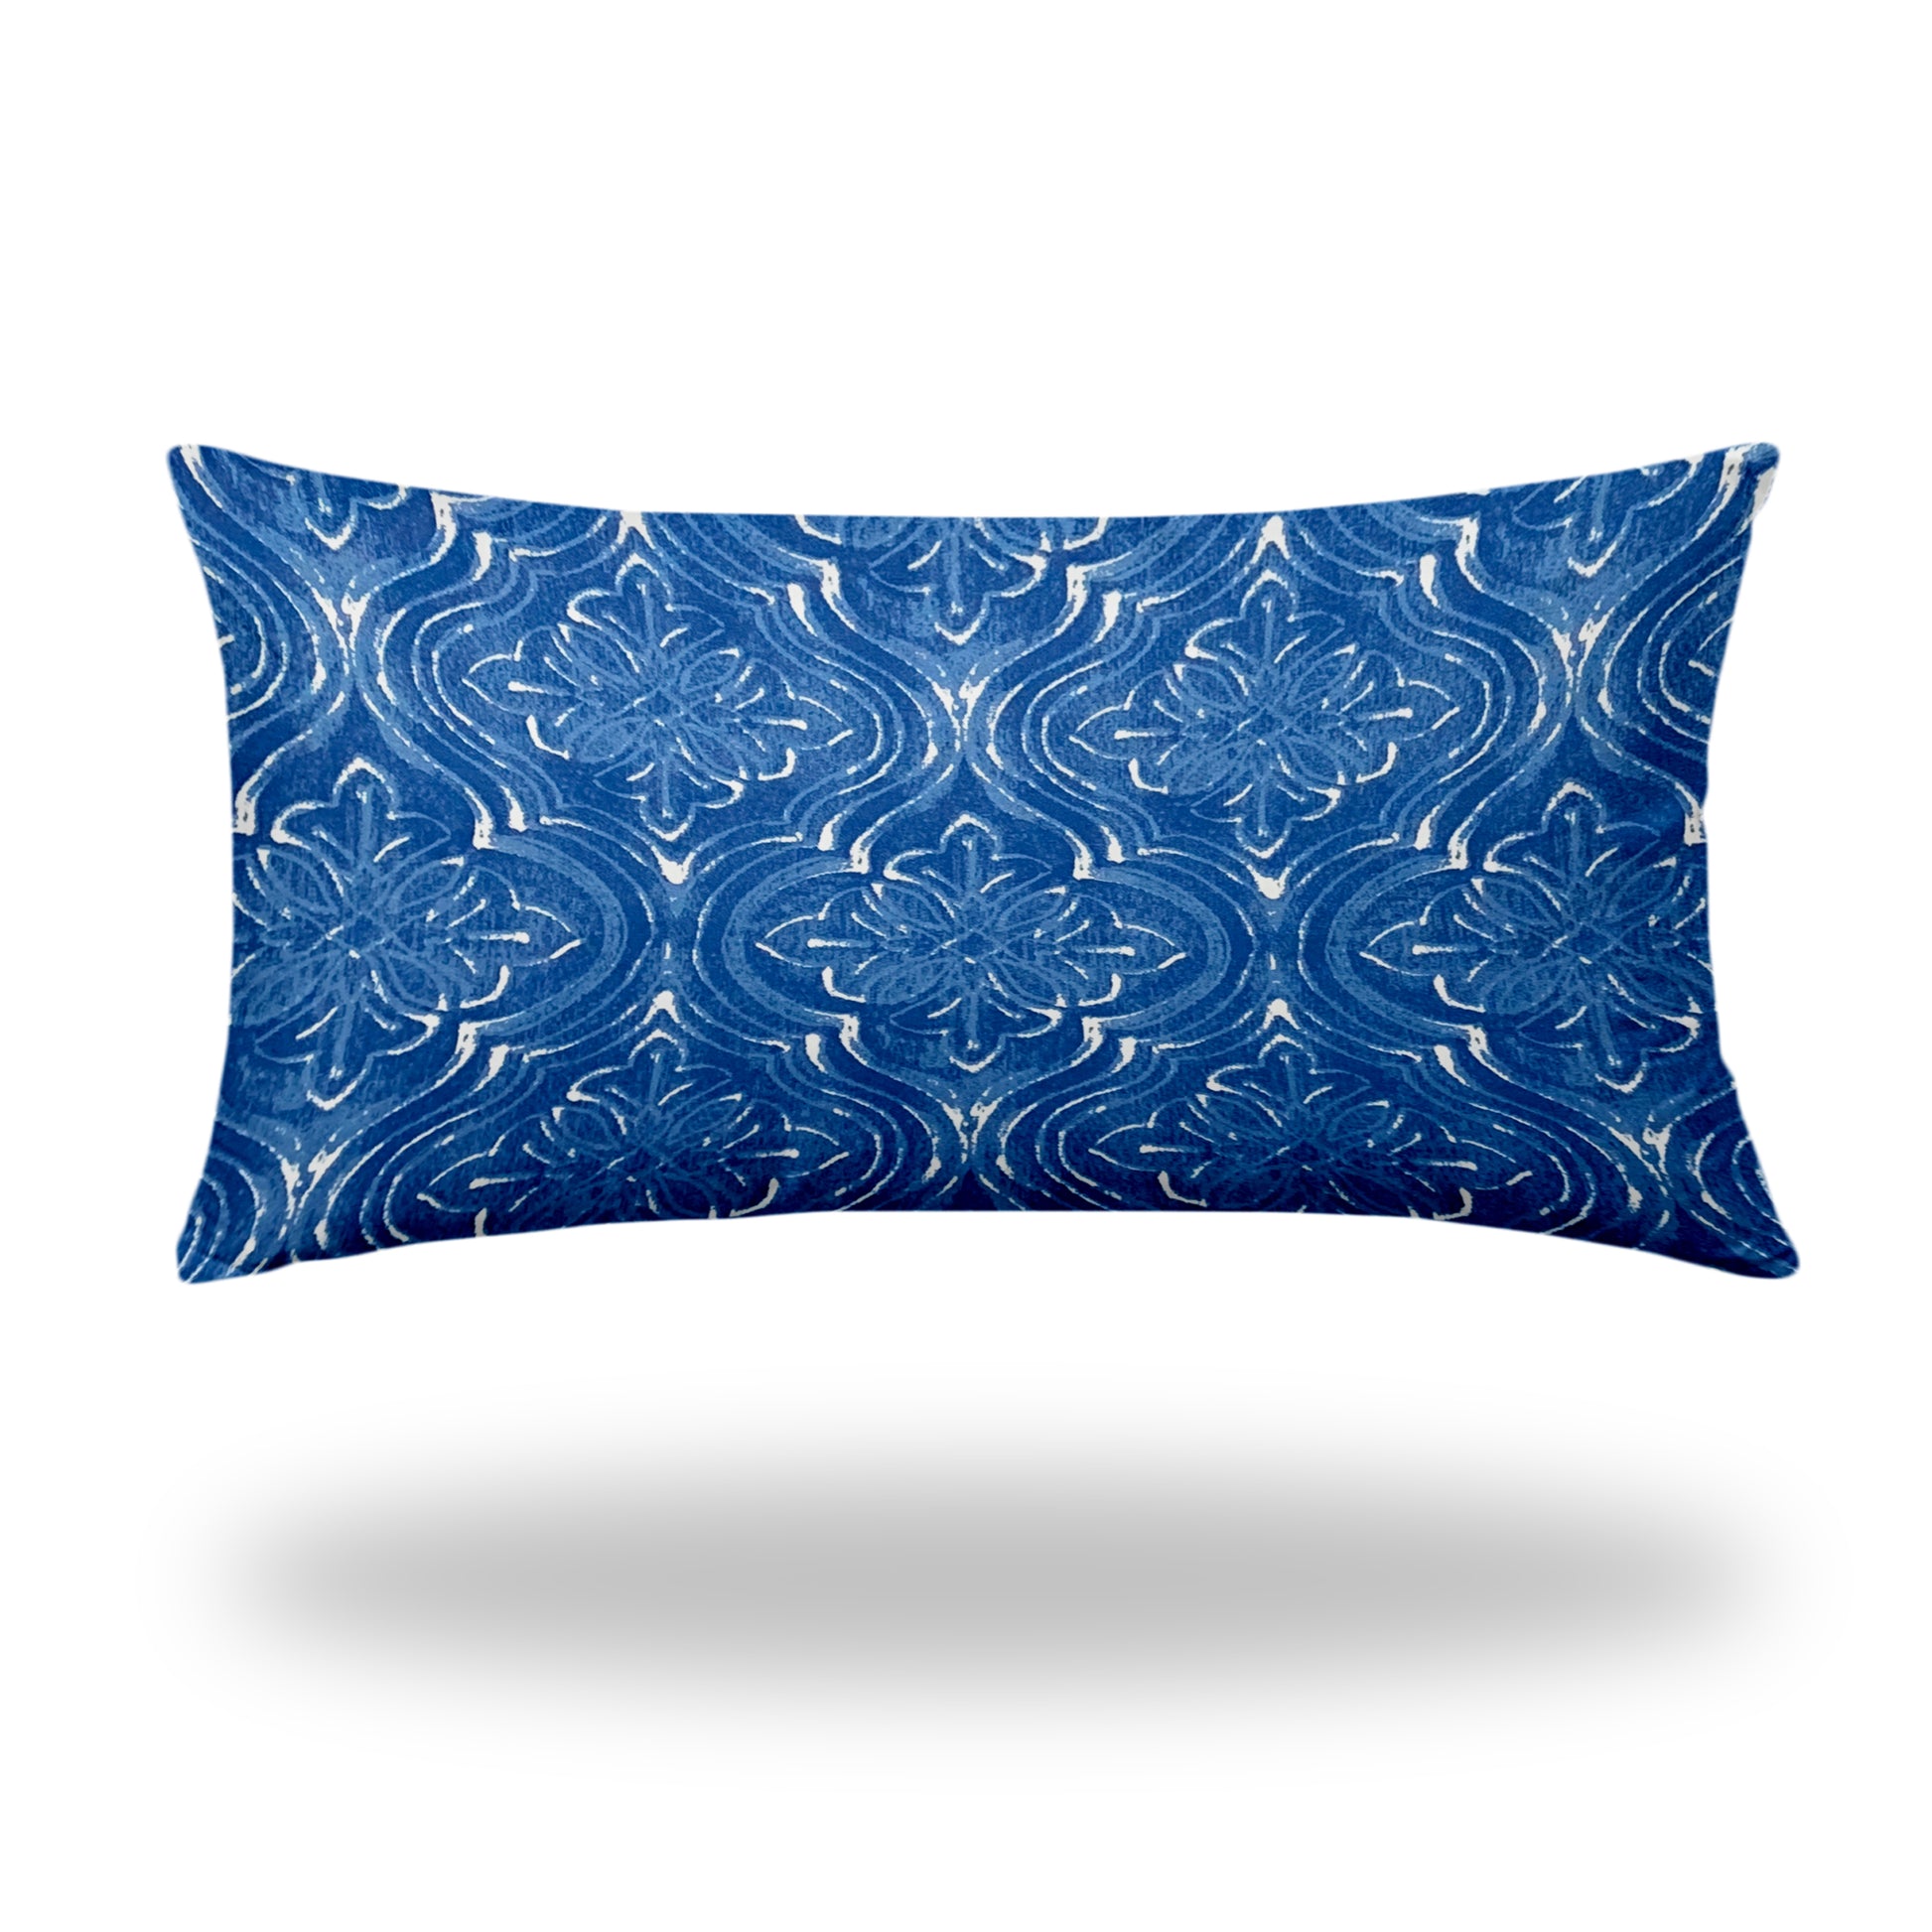 ATLAS Indoor Outdoor Soft Royal Pillow, Zipper Cover multicolor-polyester